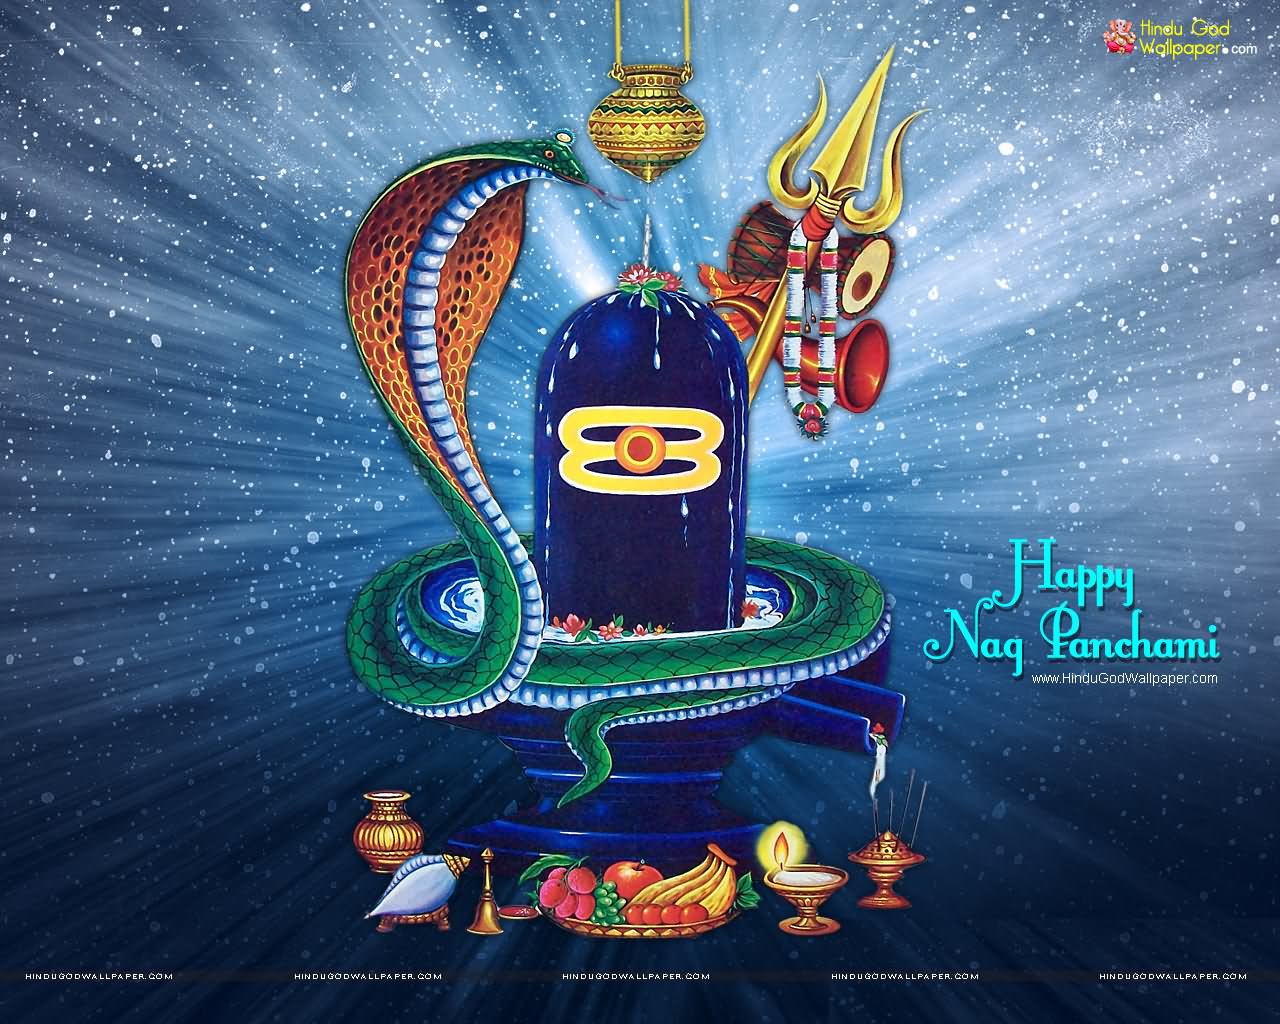 Happy Nag Panchami Greetings Picture